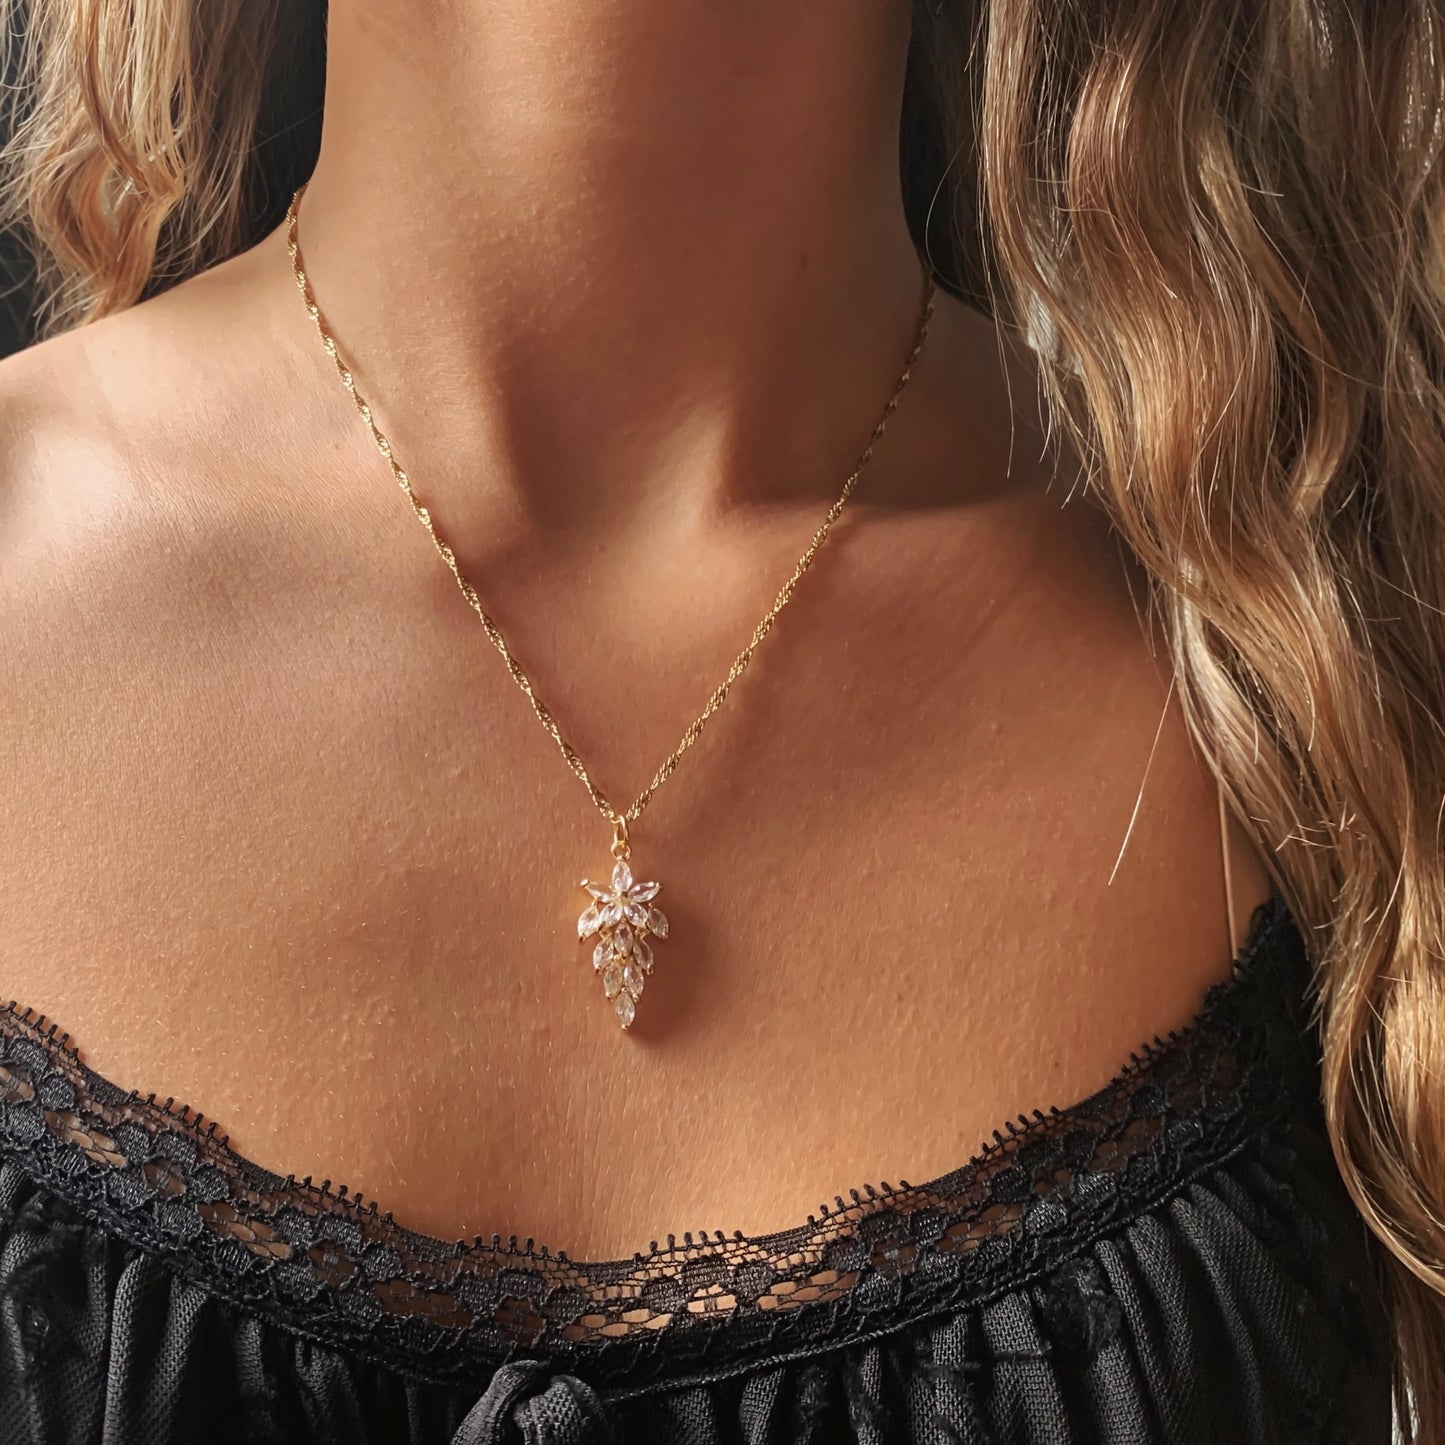 Bloom necklace